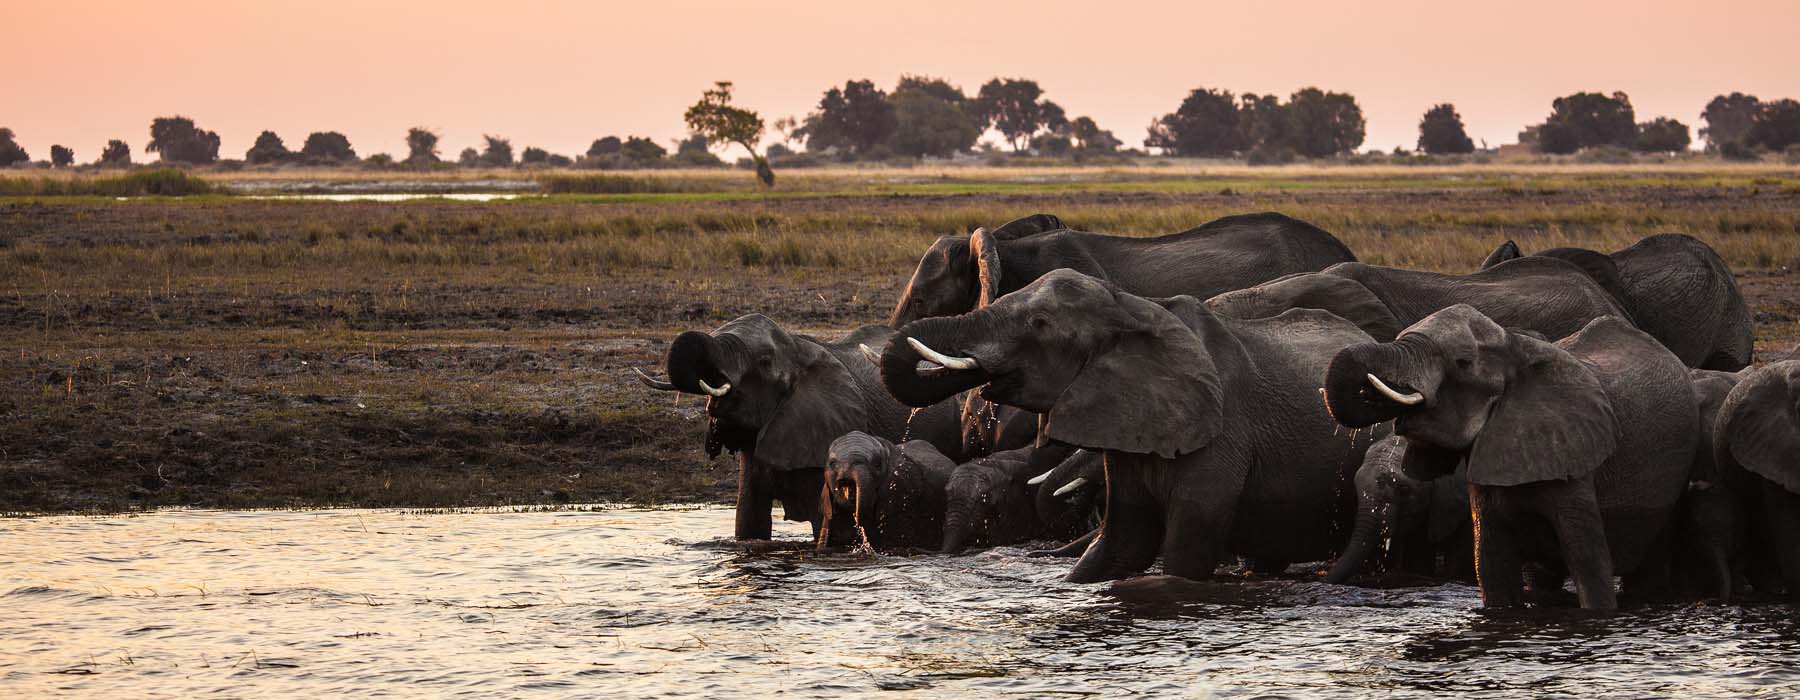 Botswana<br class="hidden-md hidden-lg" /> Wildlife Holidays